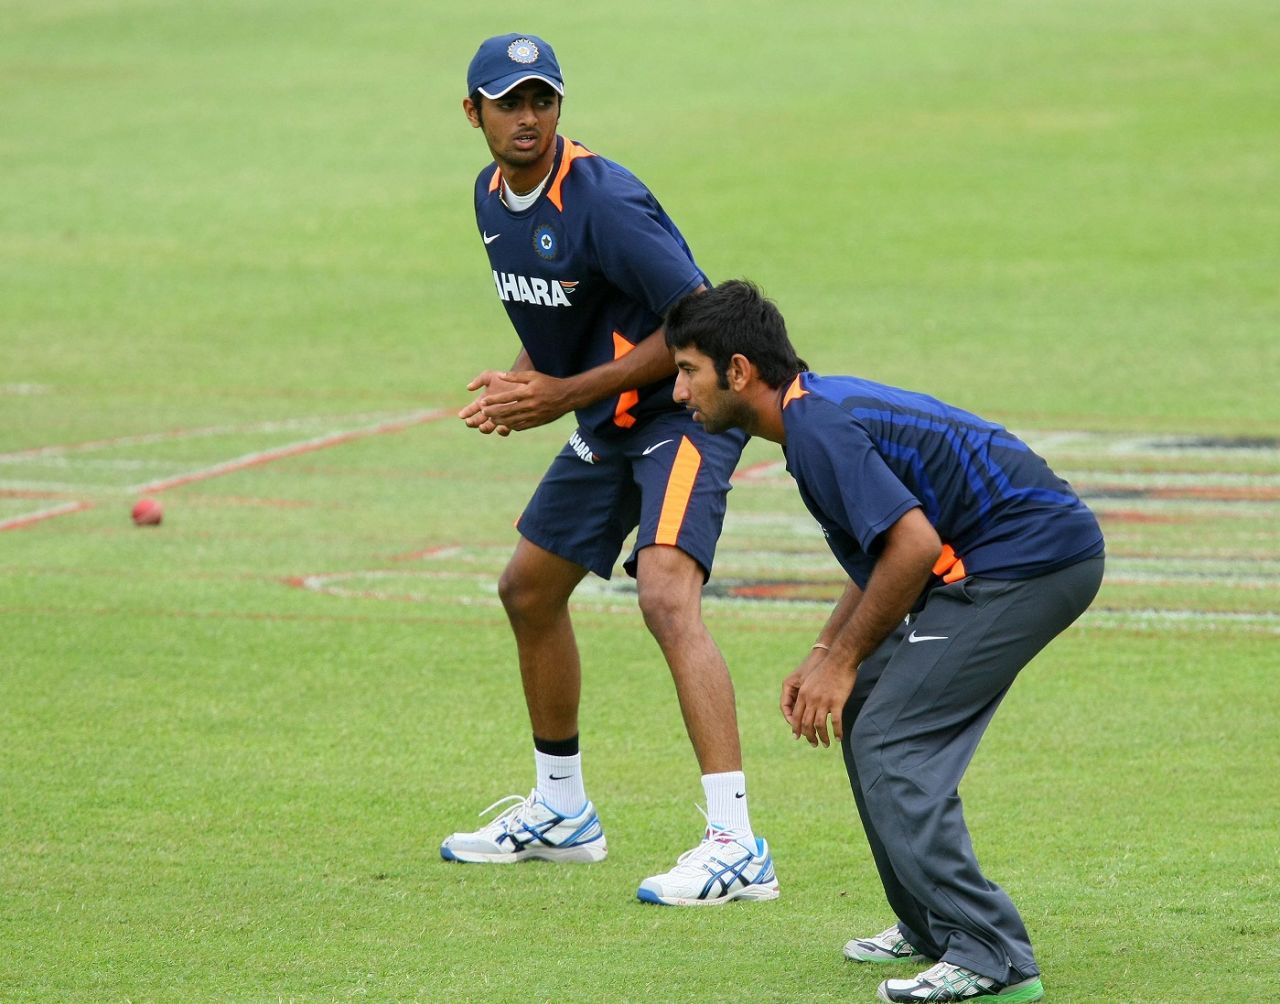 Jaydev Unadkat and Cheteshwar Pujara during a practice session, Durban, December 25, 2010 